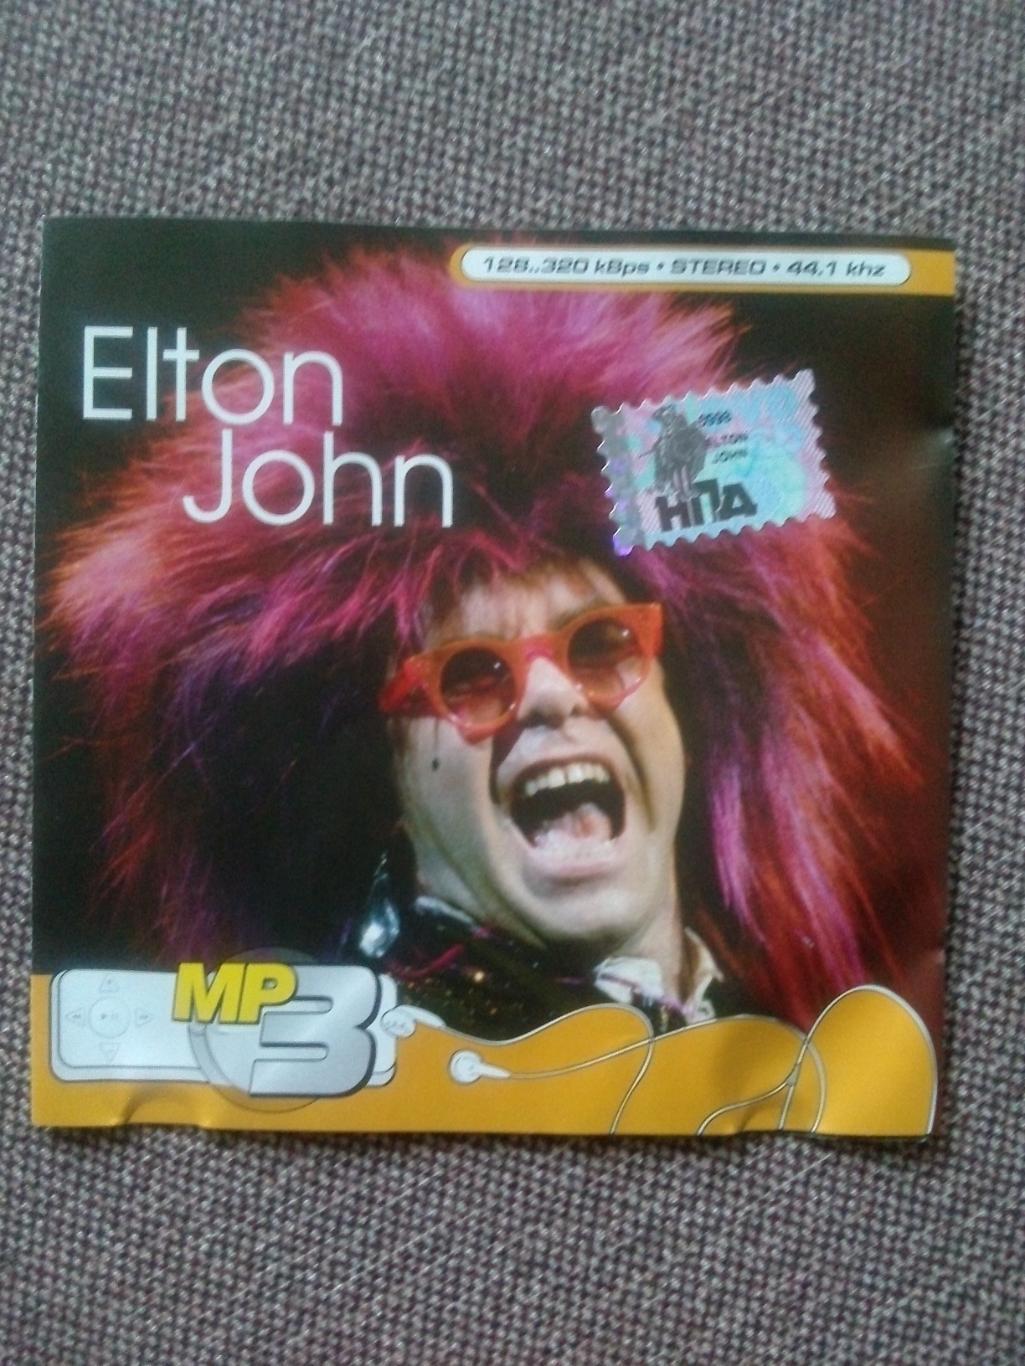 MP - 3 CD диск : Elton John (Элтон Джон) 1970 - 2006 гг. (14 альбомов) Рок